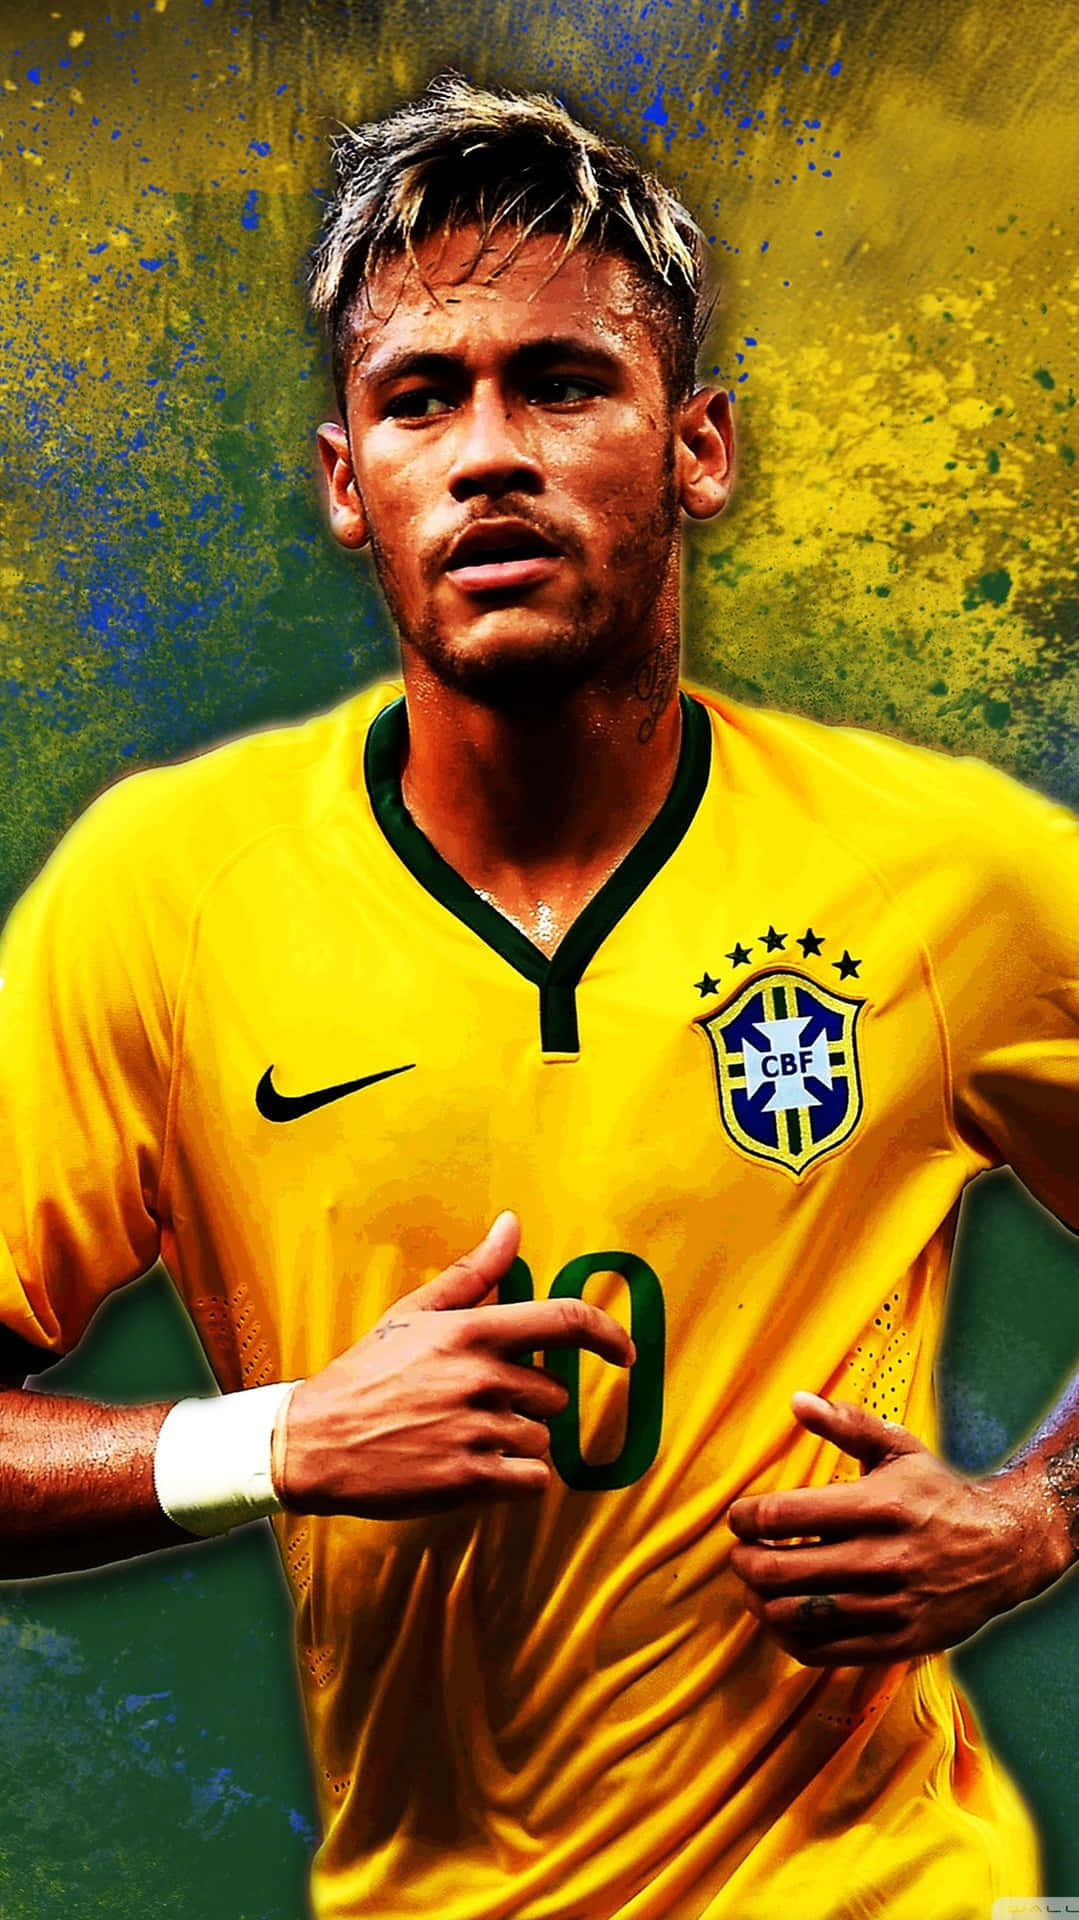 Neymar – The inspiring football star